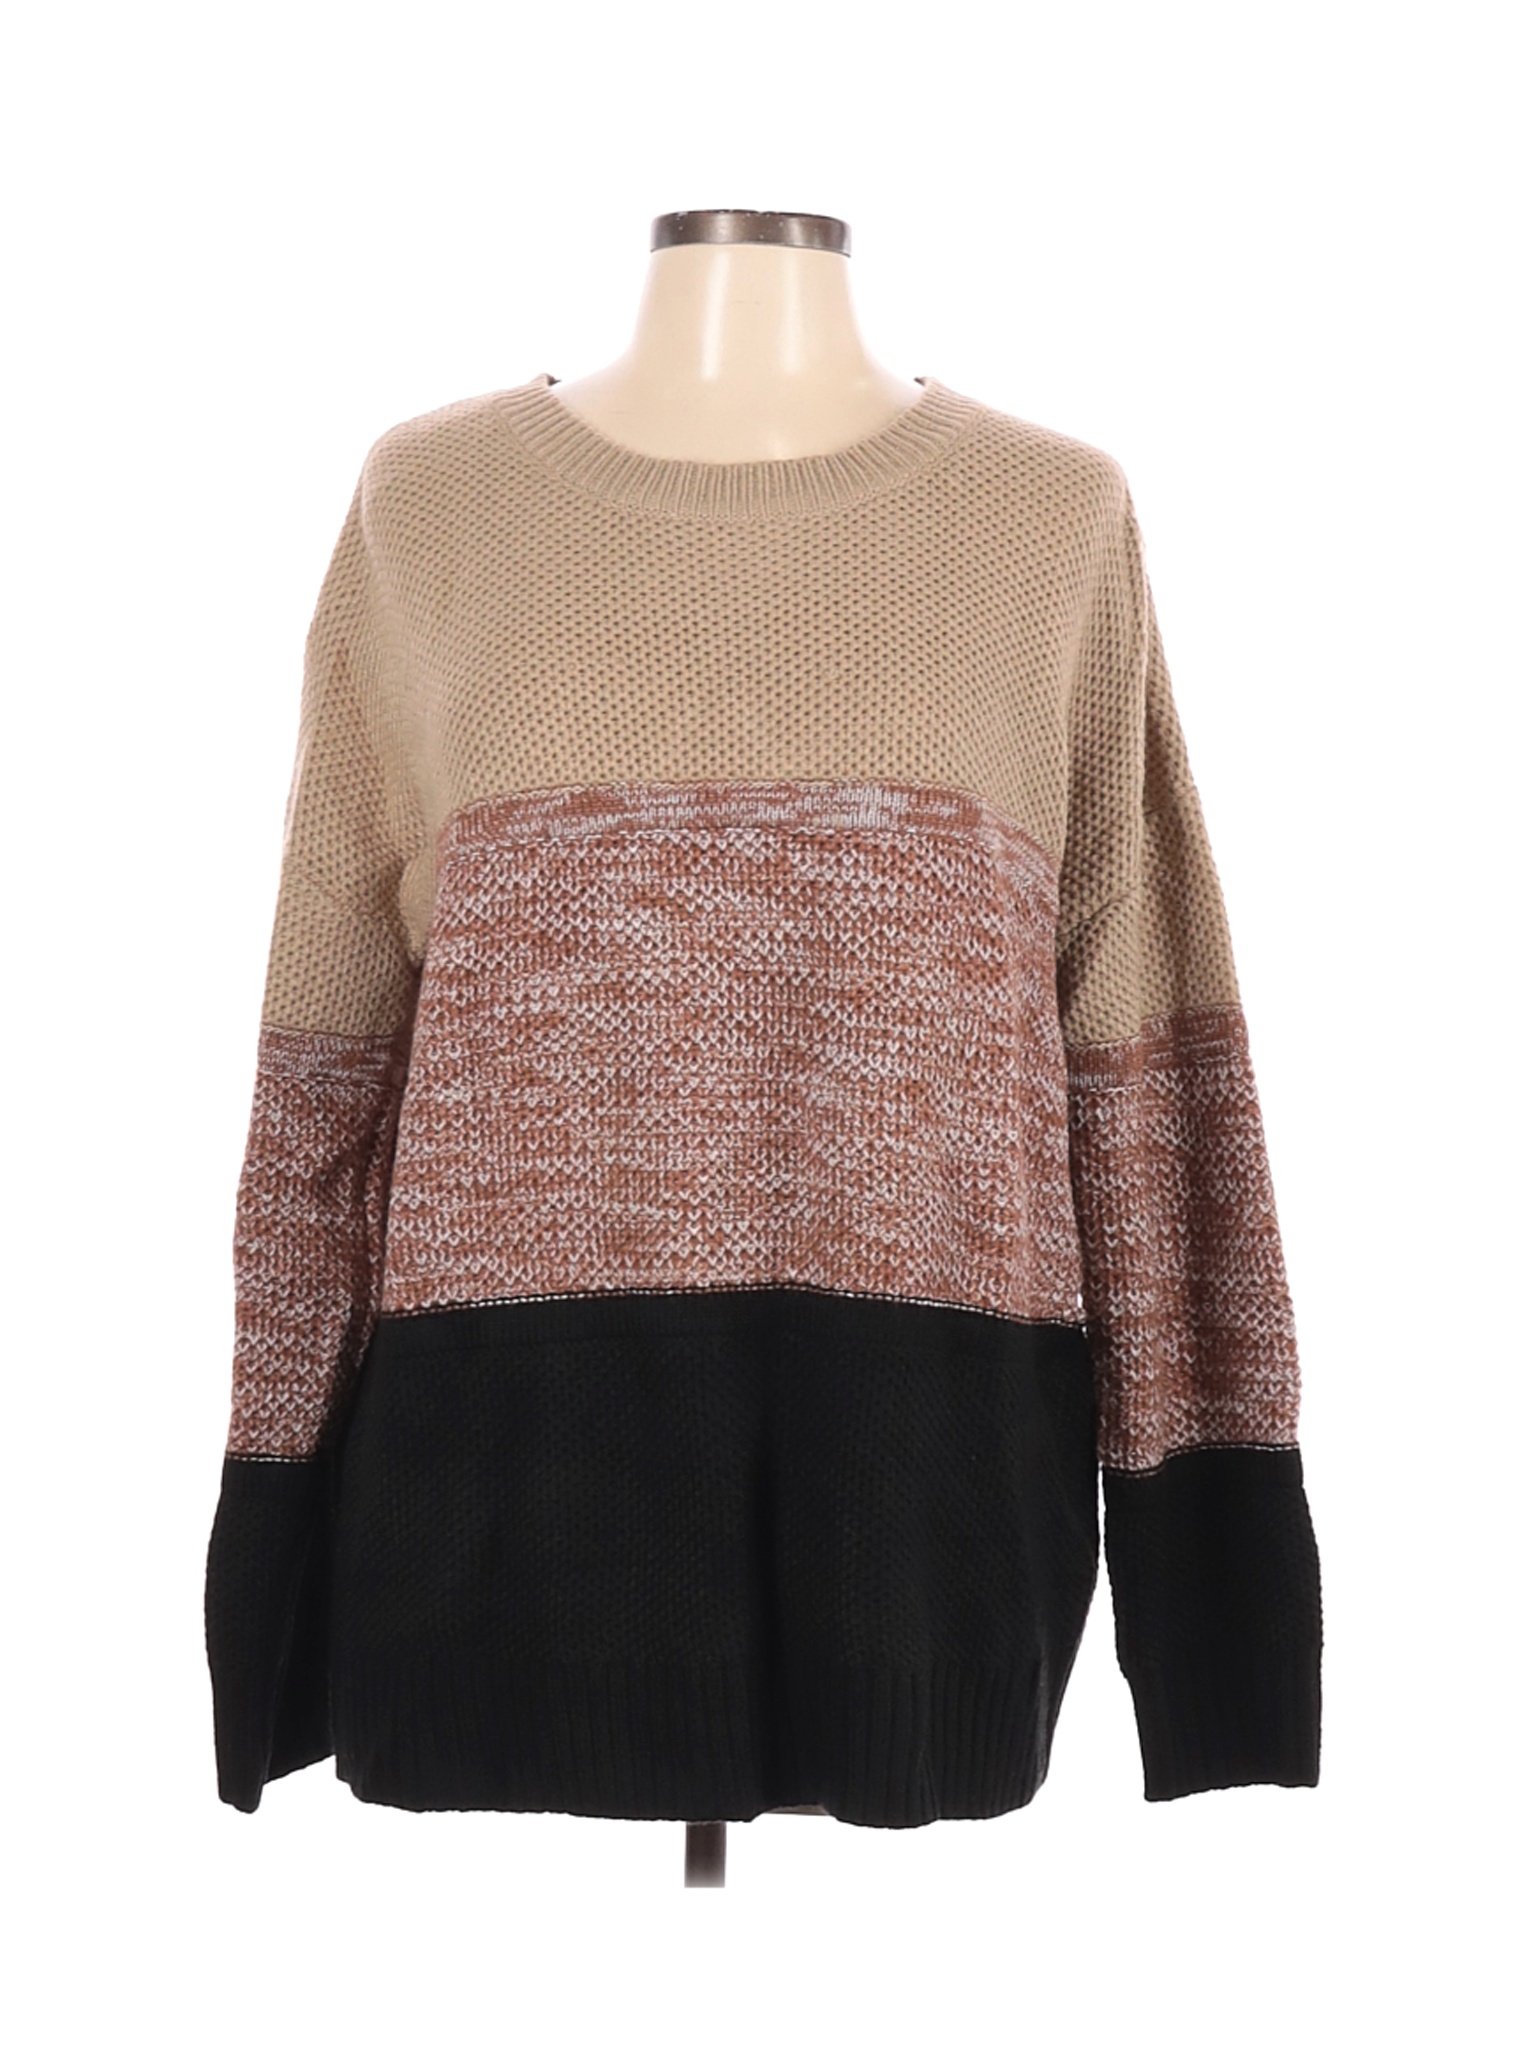 Unbranded Women Brown Pullover Sweater XL | eBay